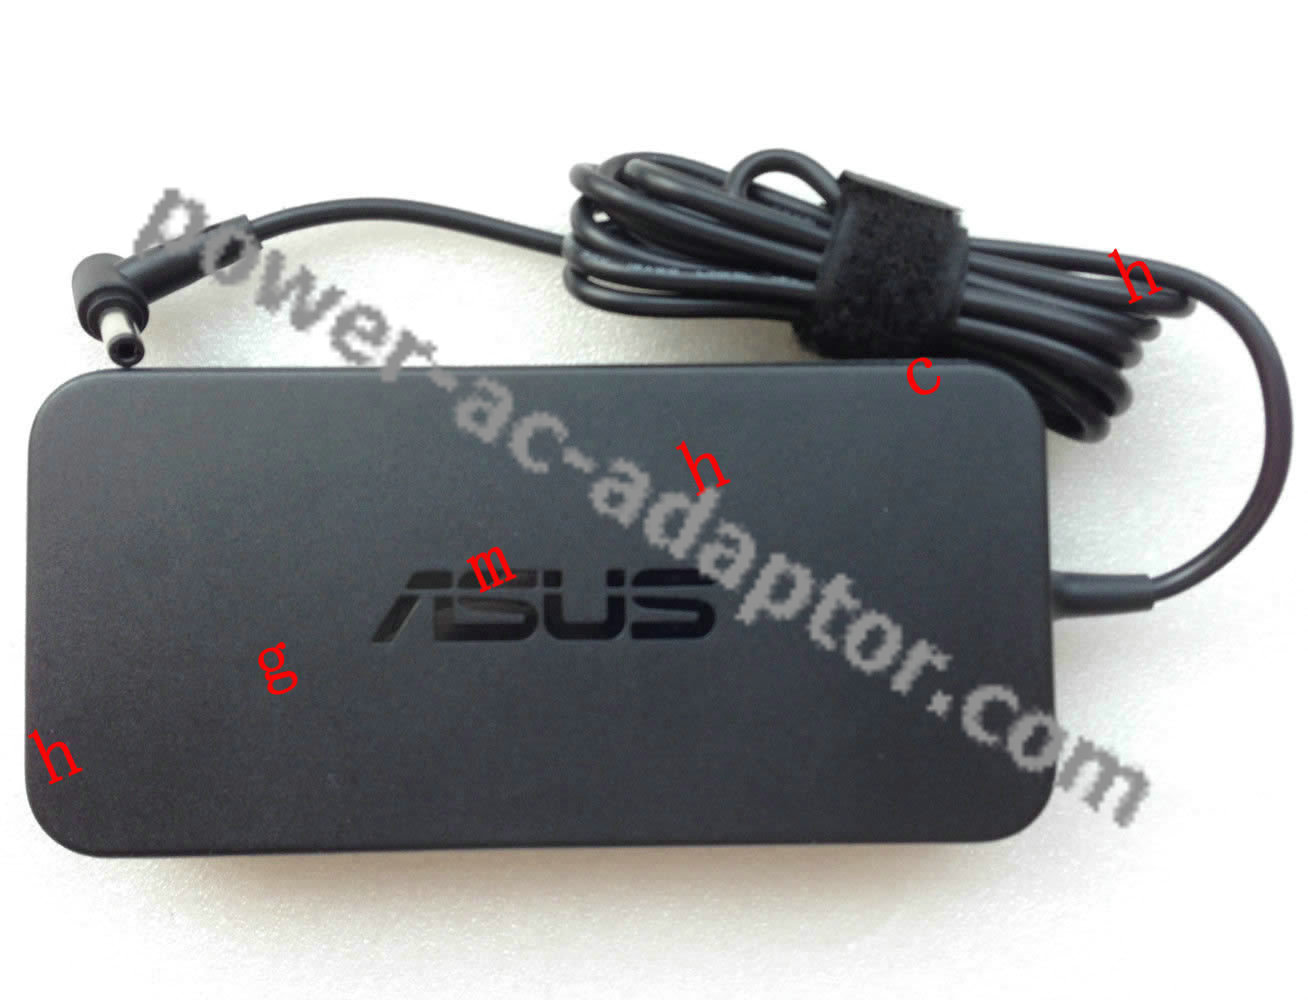 OEM Asus 120W G60Vx P8400 Gaming Laptop Slim AC Adapter for